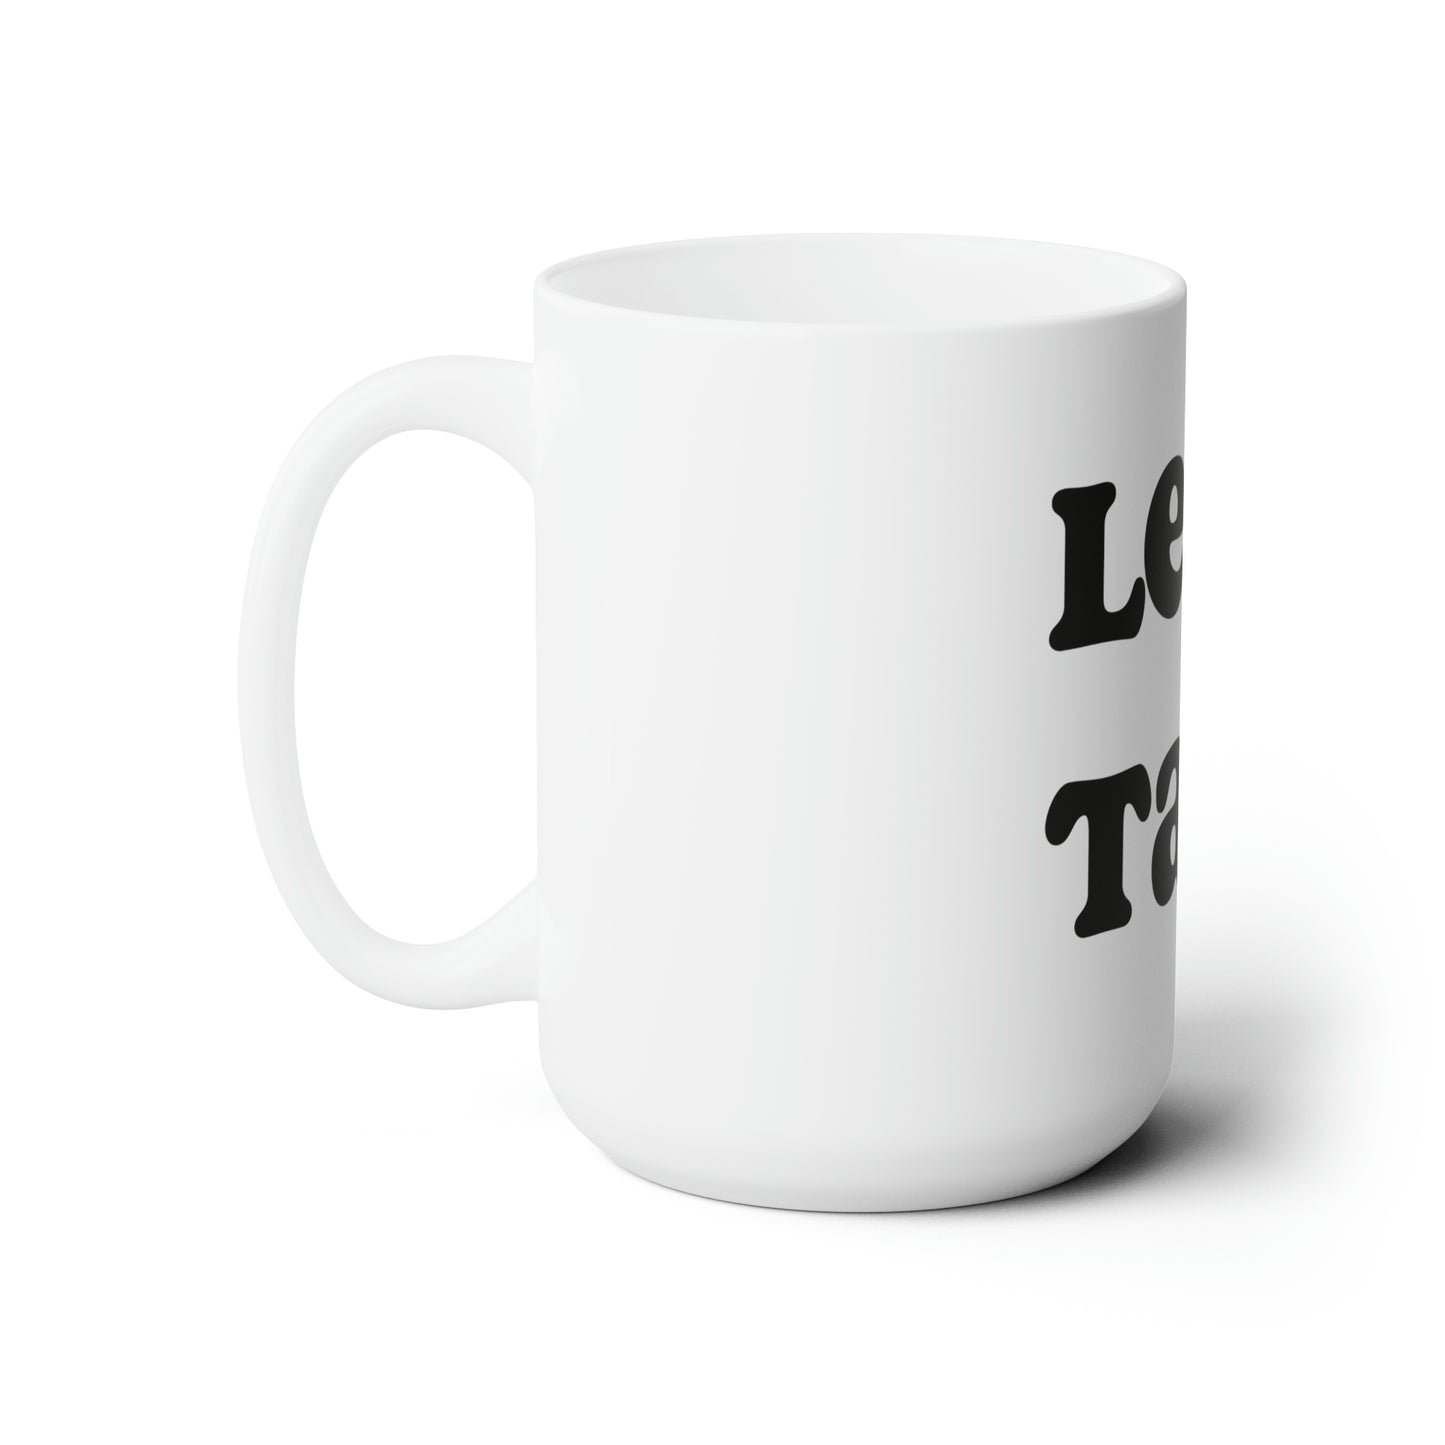 Let's Talk - Ceramic Mug | 15oz